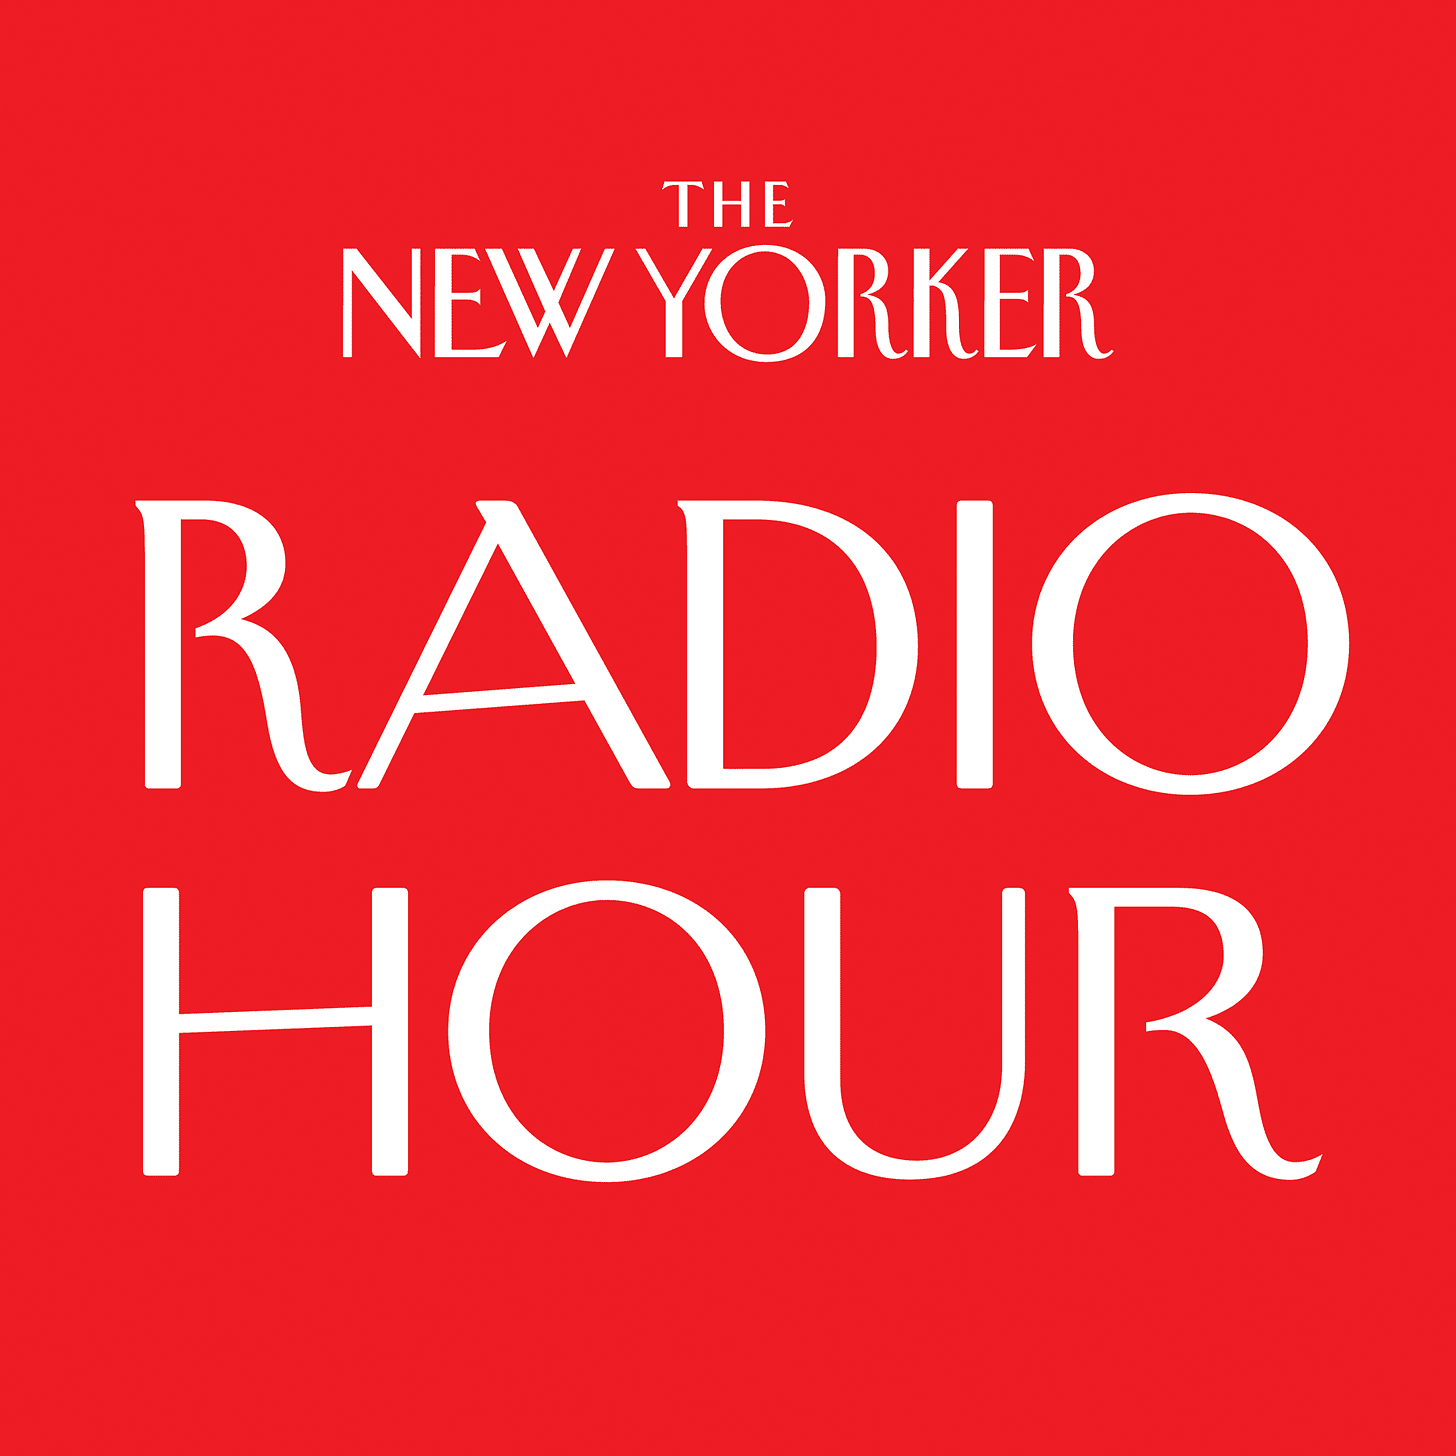 The New Yorker Radio Hour: Episodes | WNYC Studios | Podcasts